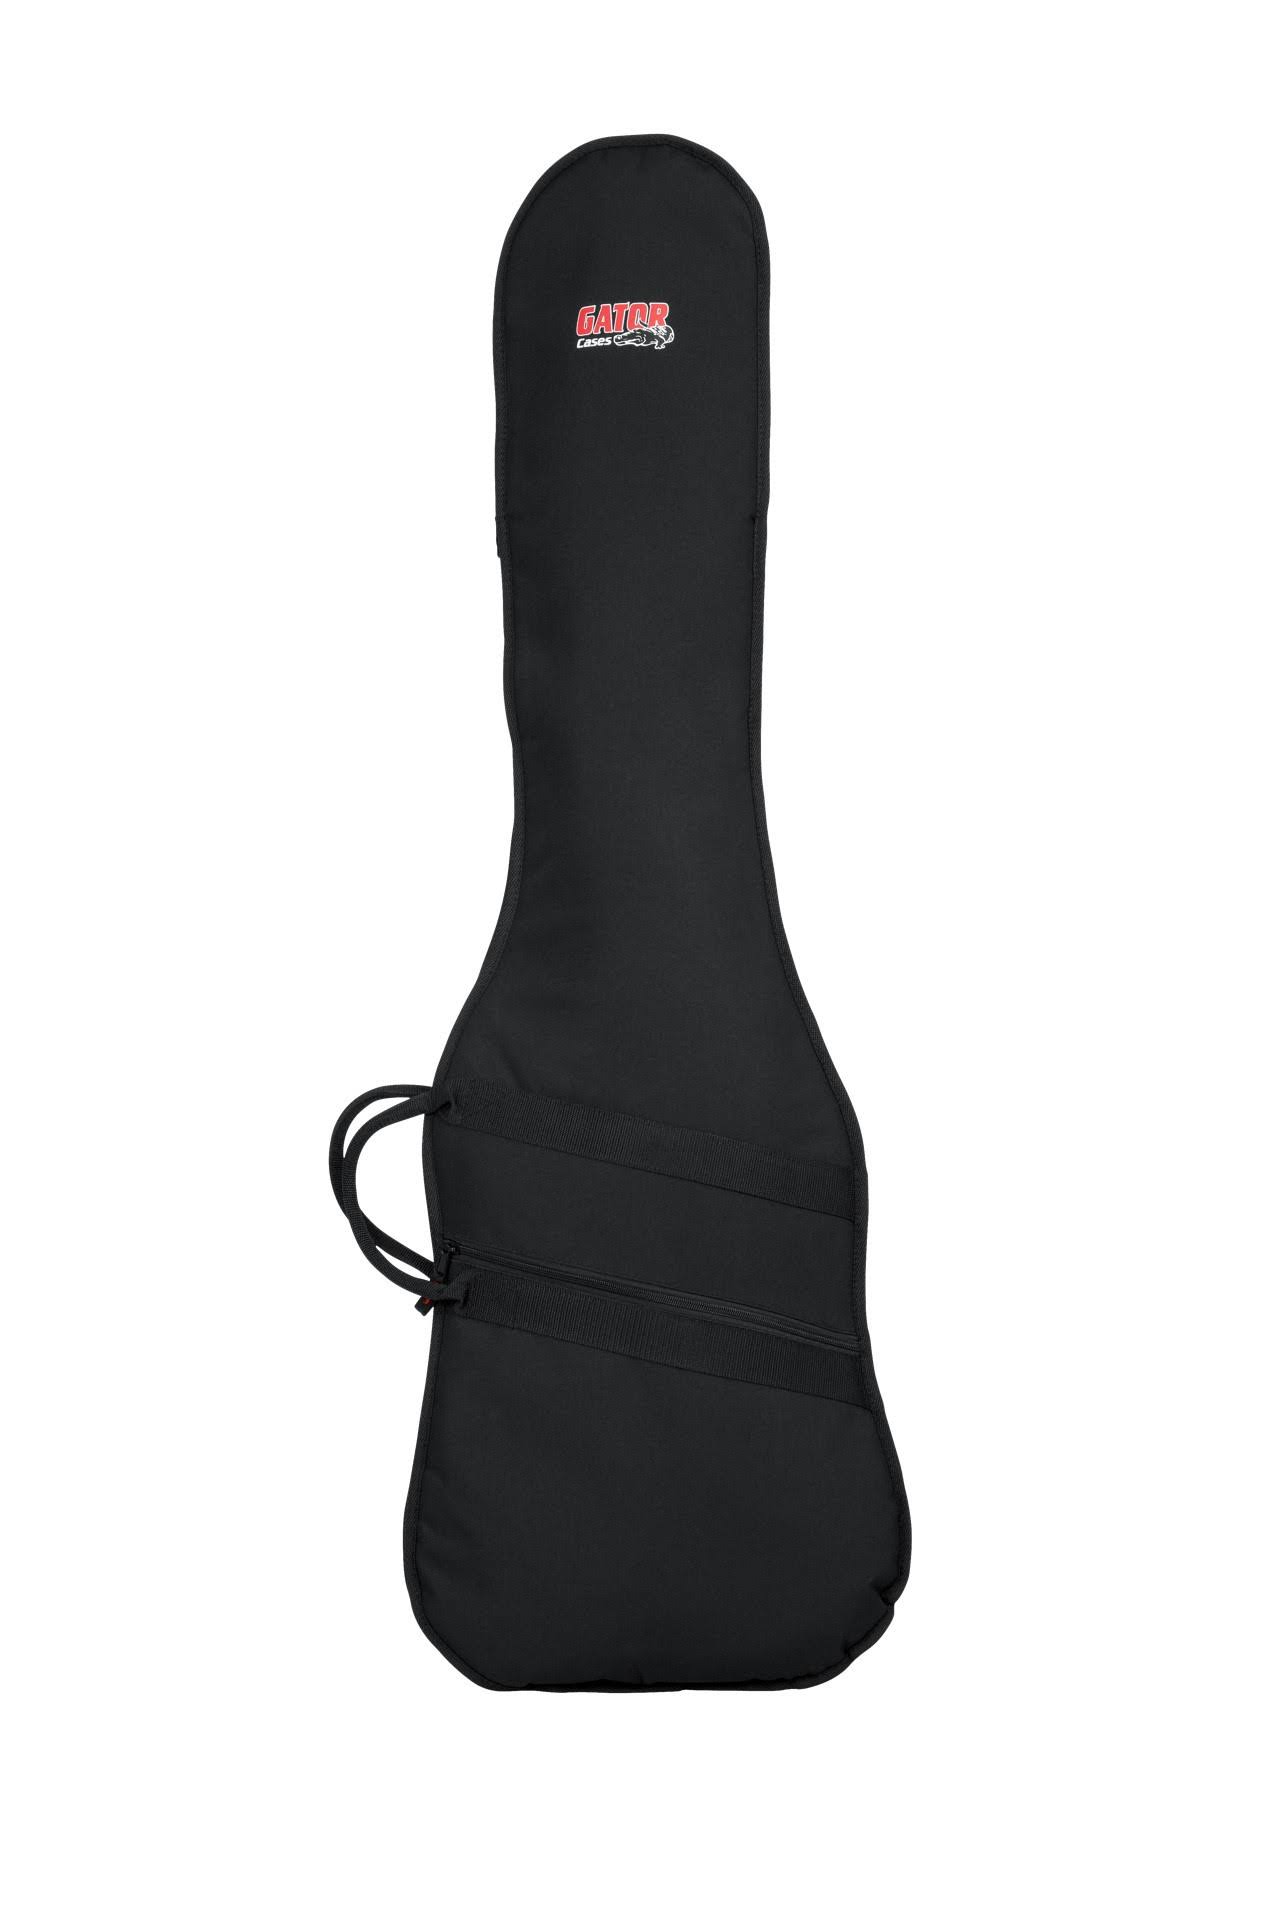 Gator Bass Guitar Bag - Black